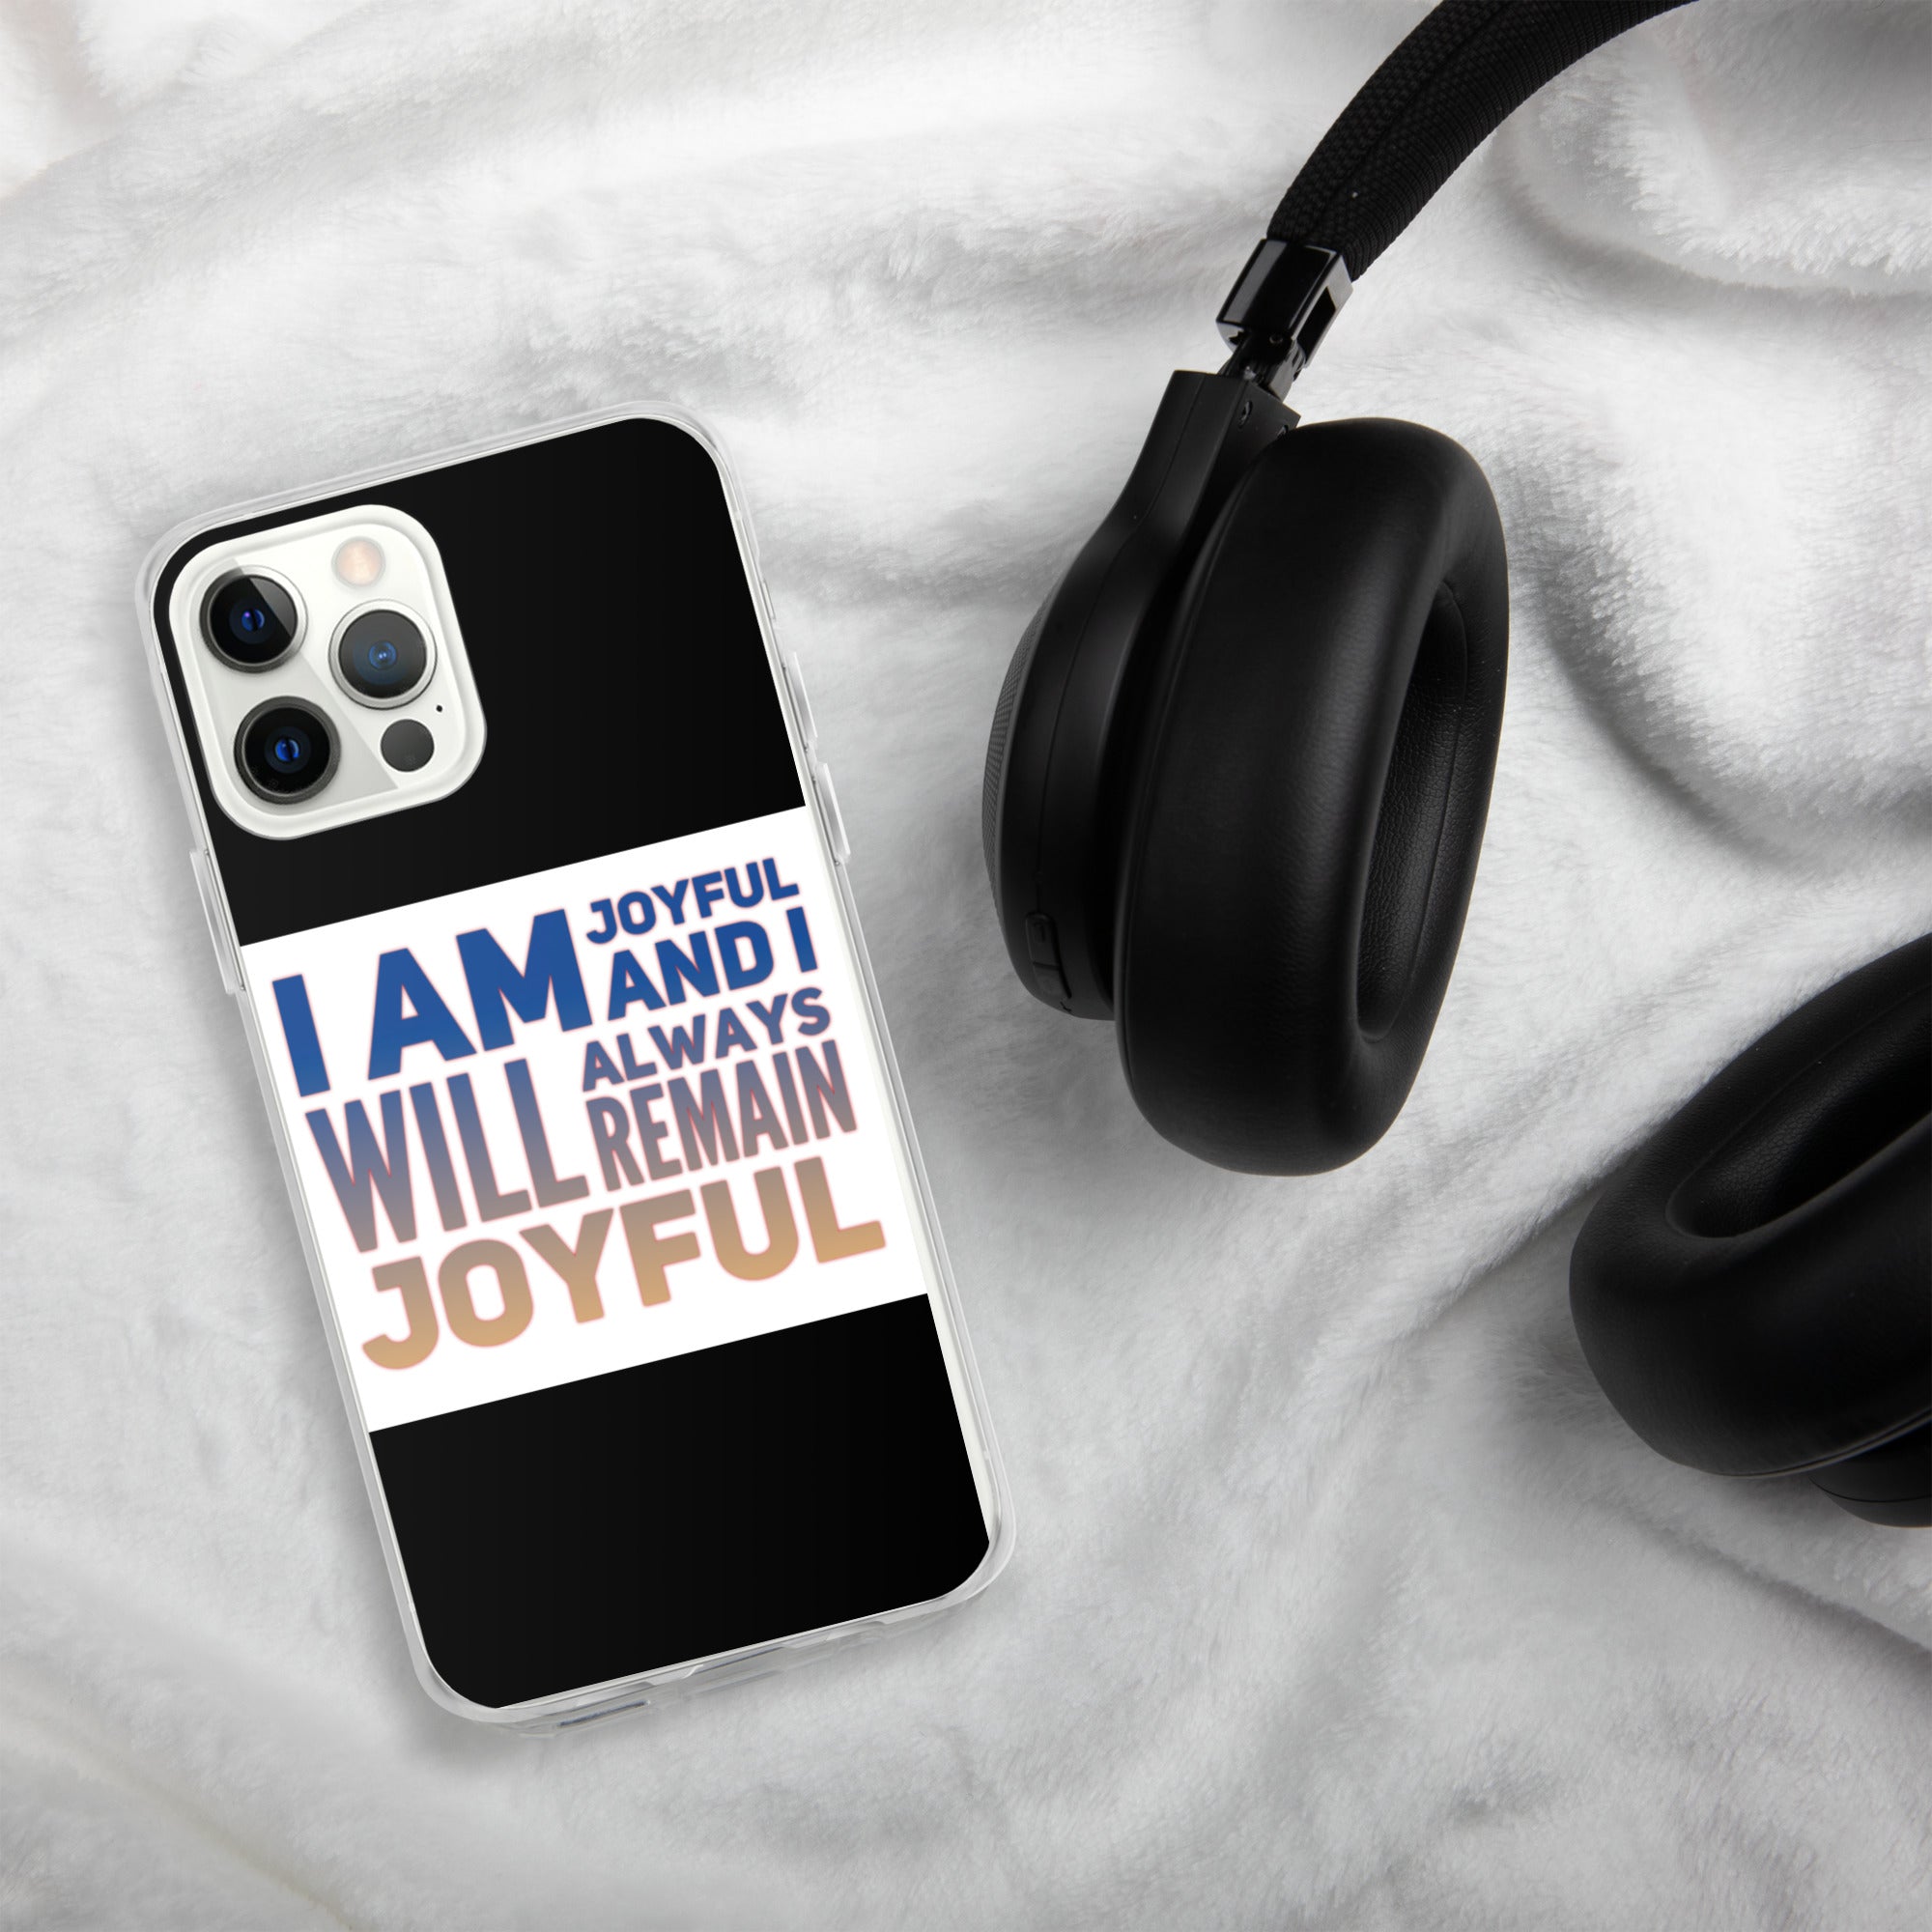 GloWell Designs - iPhone Case - Affirmation Quote - I Am Joyful - GloWell Designs